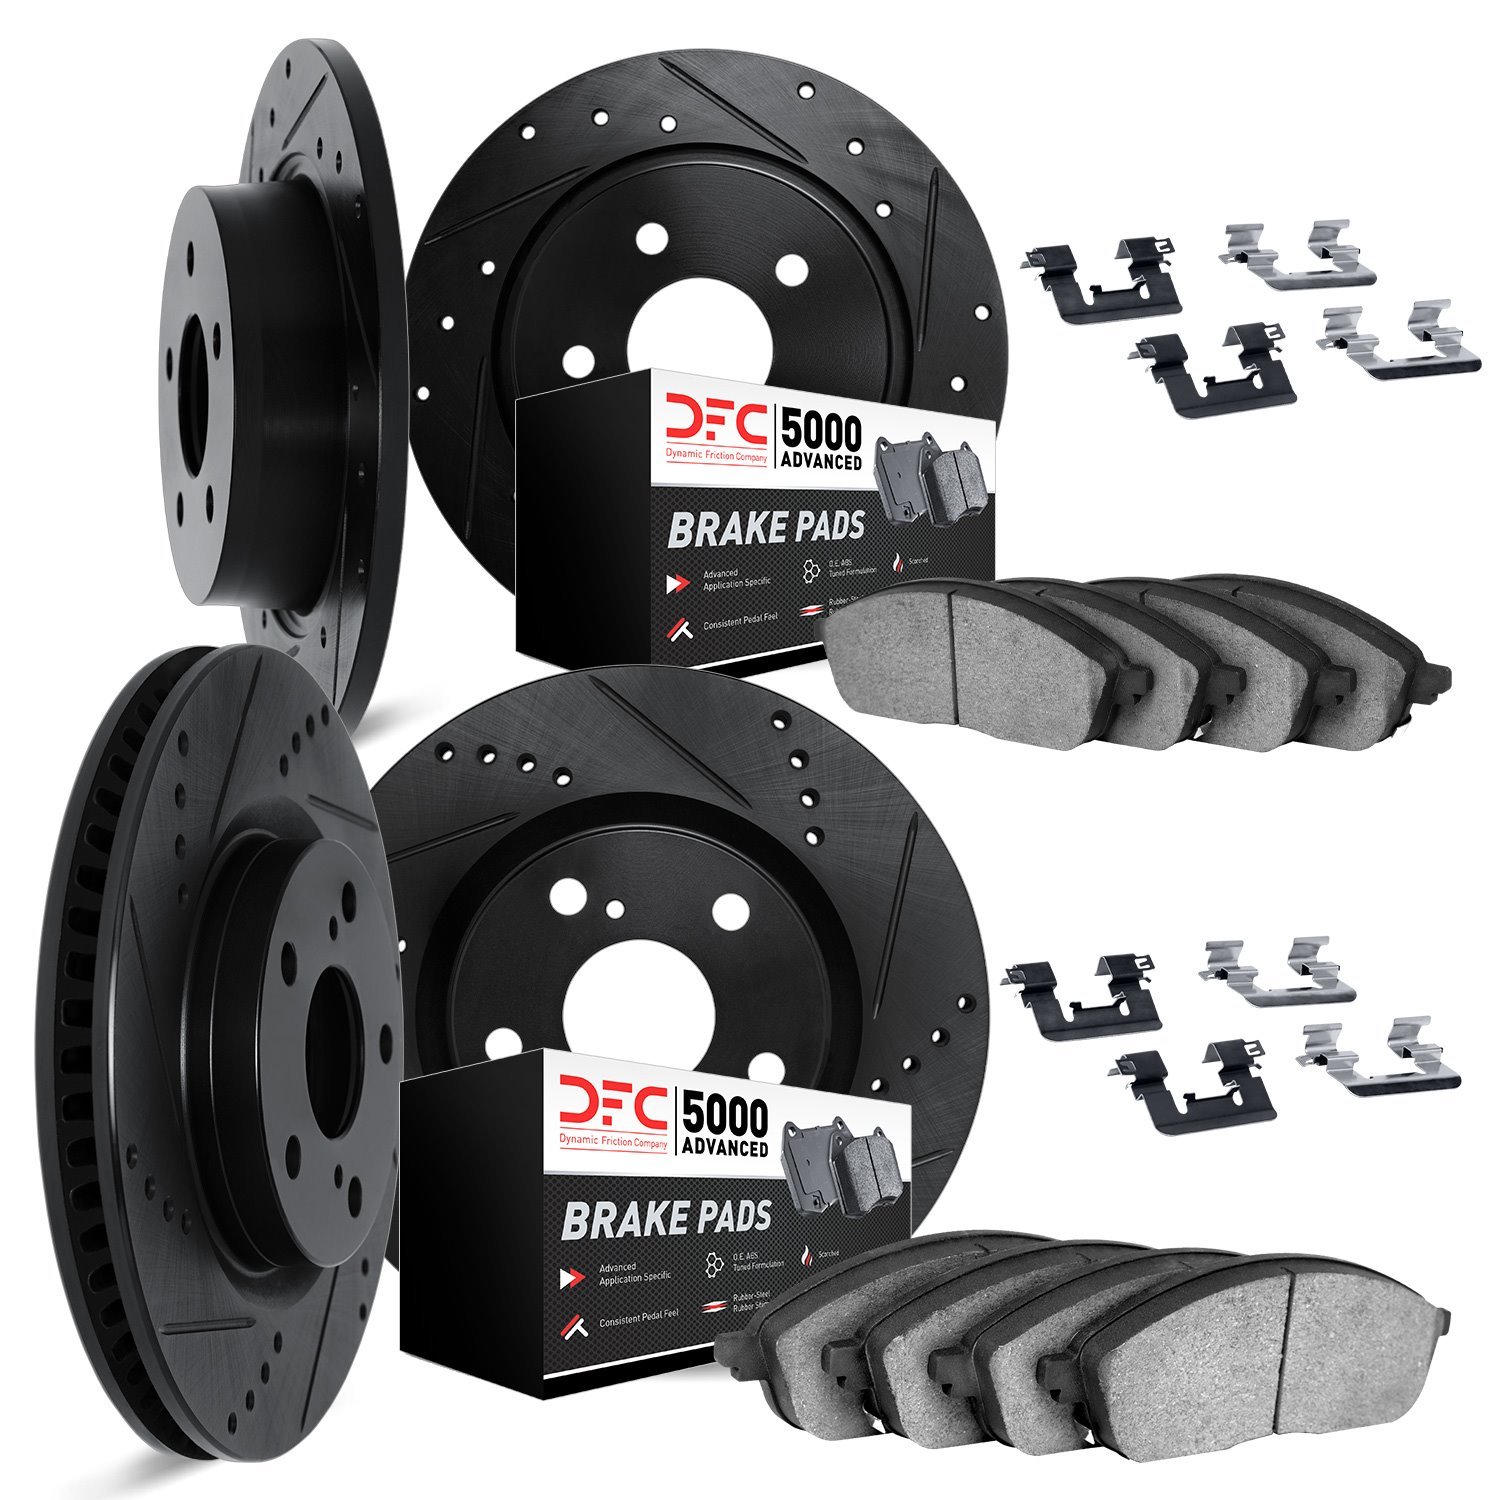 8514-42019 Drilled/Slotted Brake Rotors w/5000 Advanced Brake Pads Kit & Hardware [Black], 2015-2020 Mopar, Position: Front and